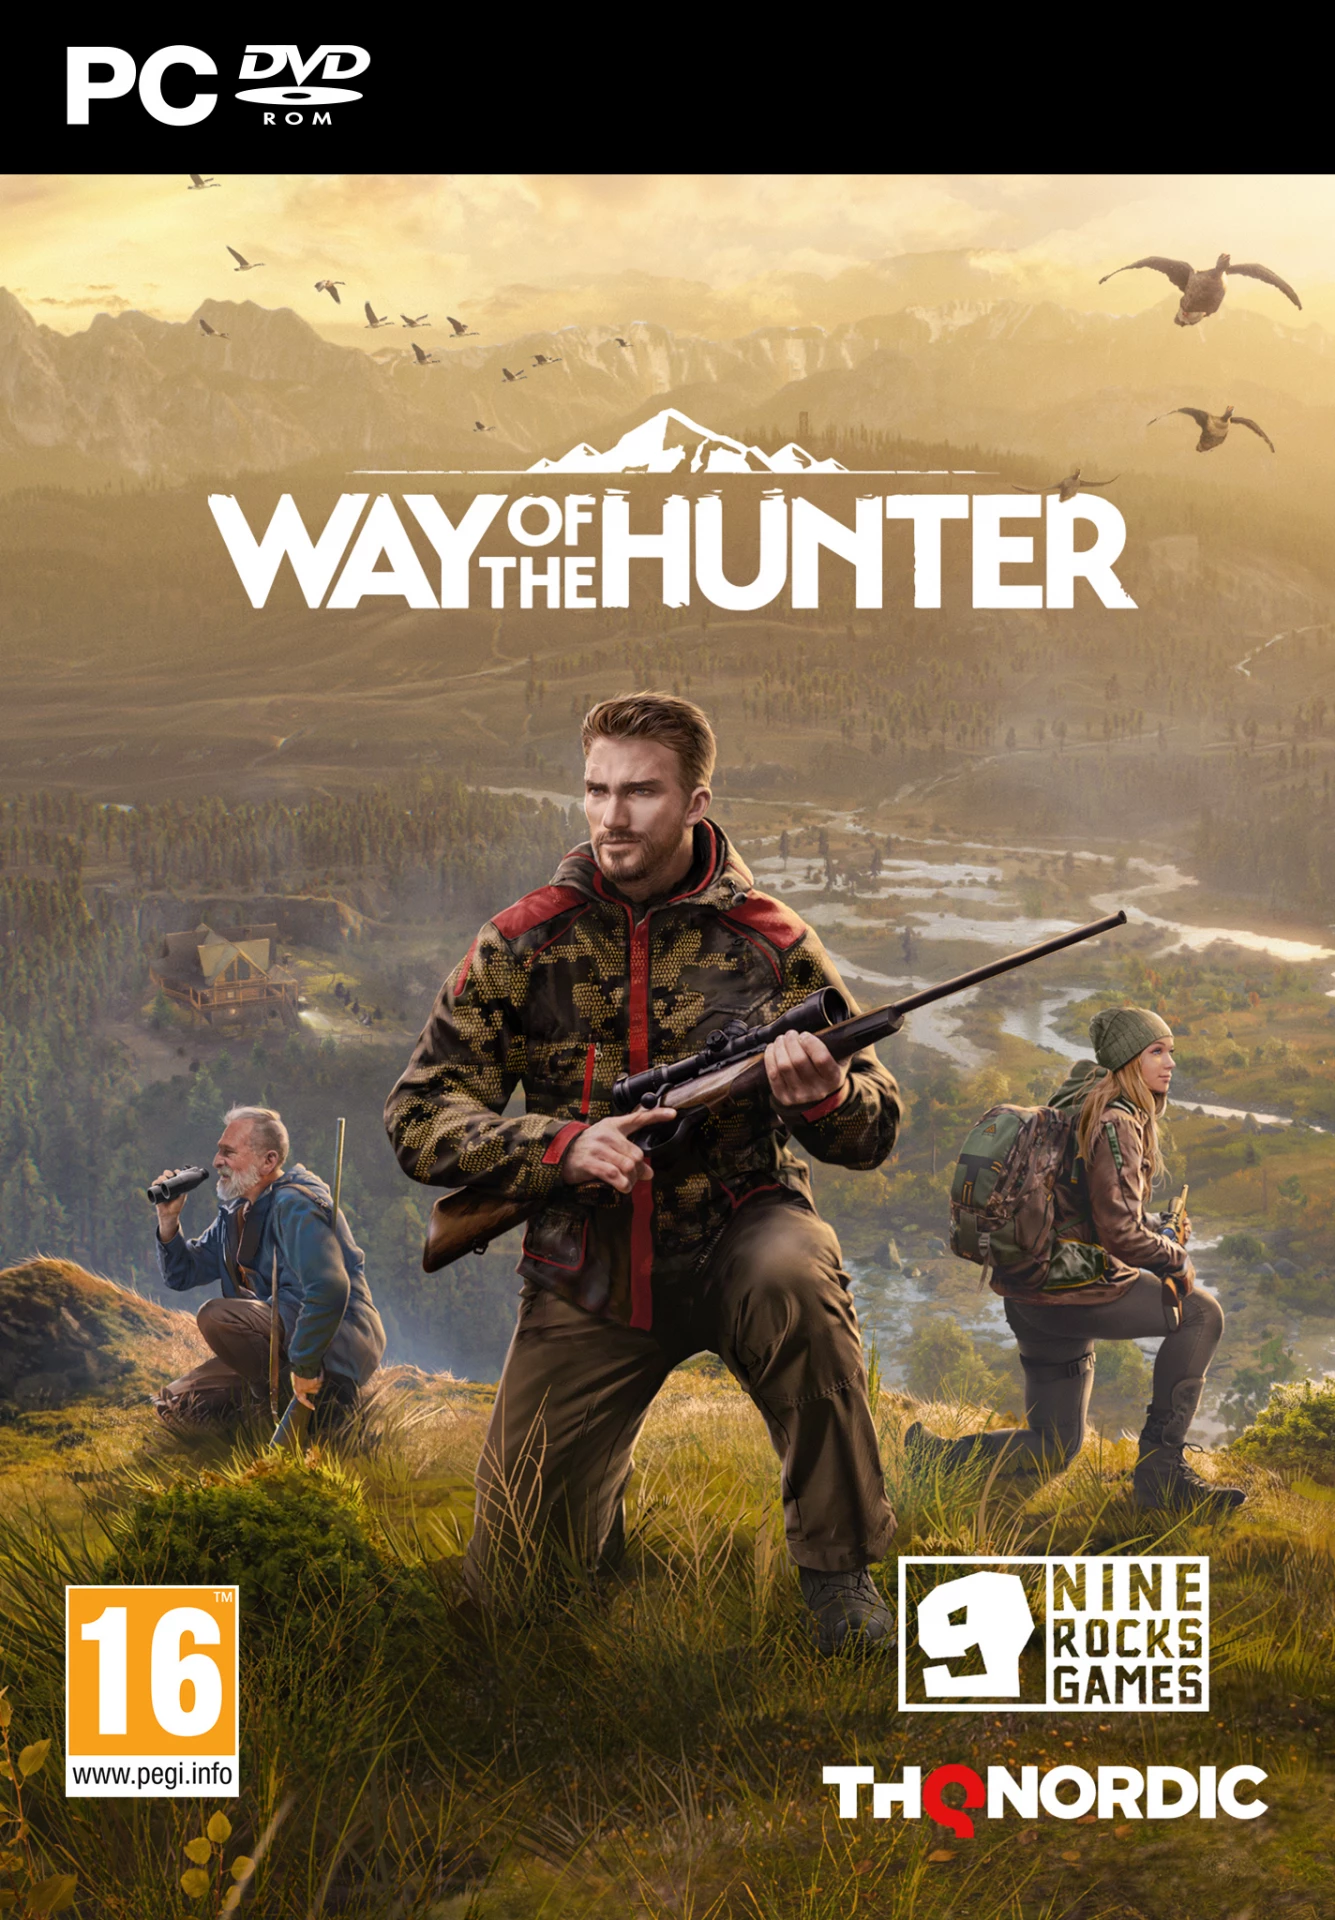 Way of the Hunter (PC), Nine Rocks Games